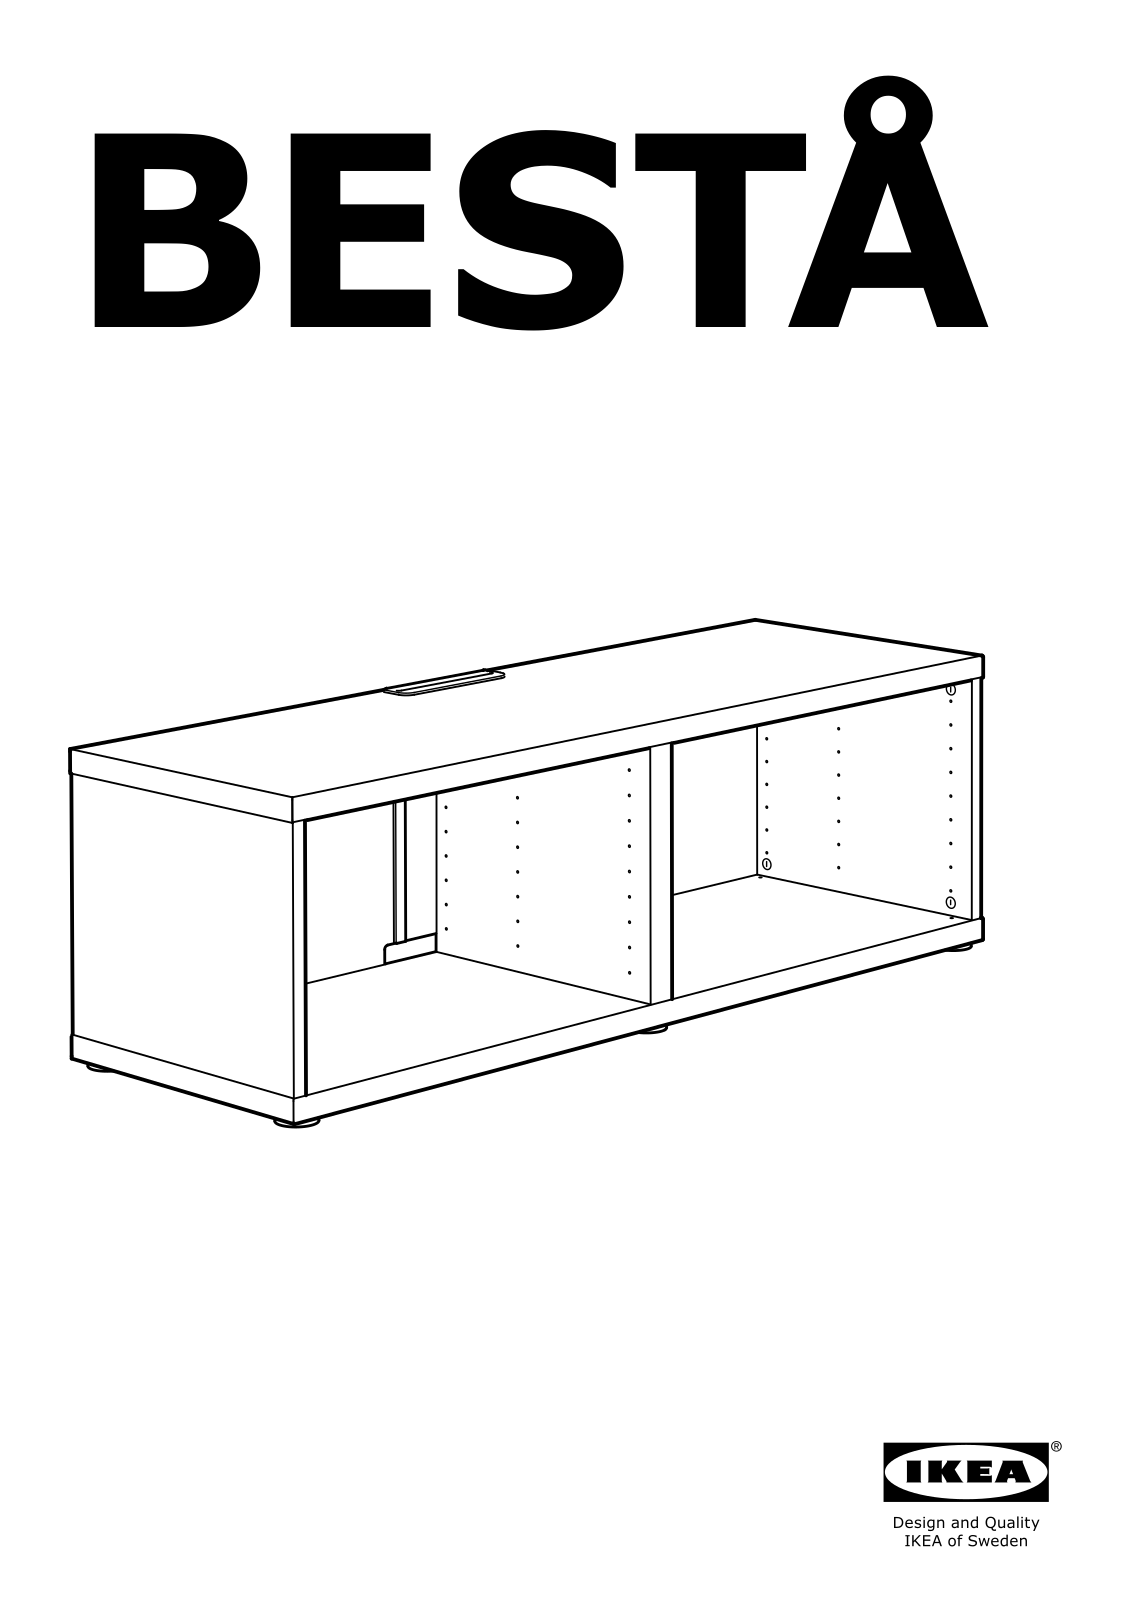 Ikea S39136922, S49061228, S49098552, S59081462, S59137322 Assembly instructions